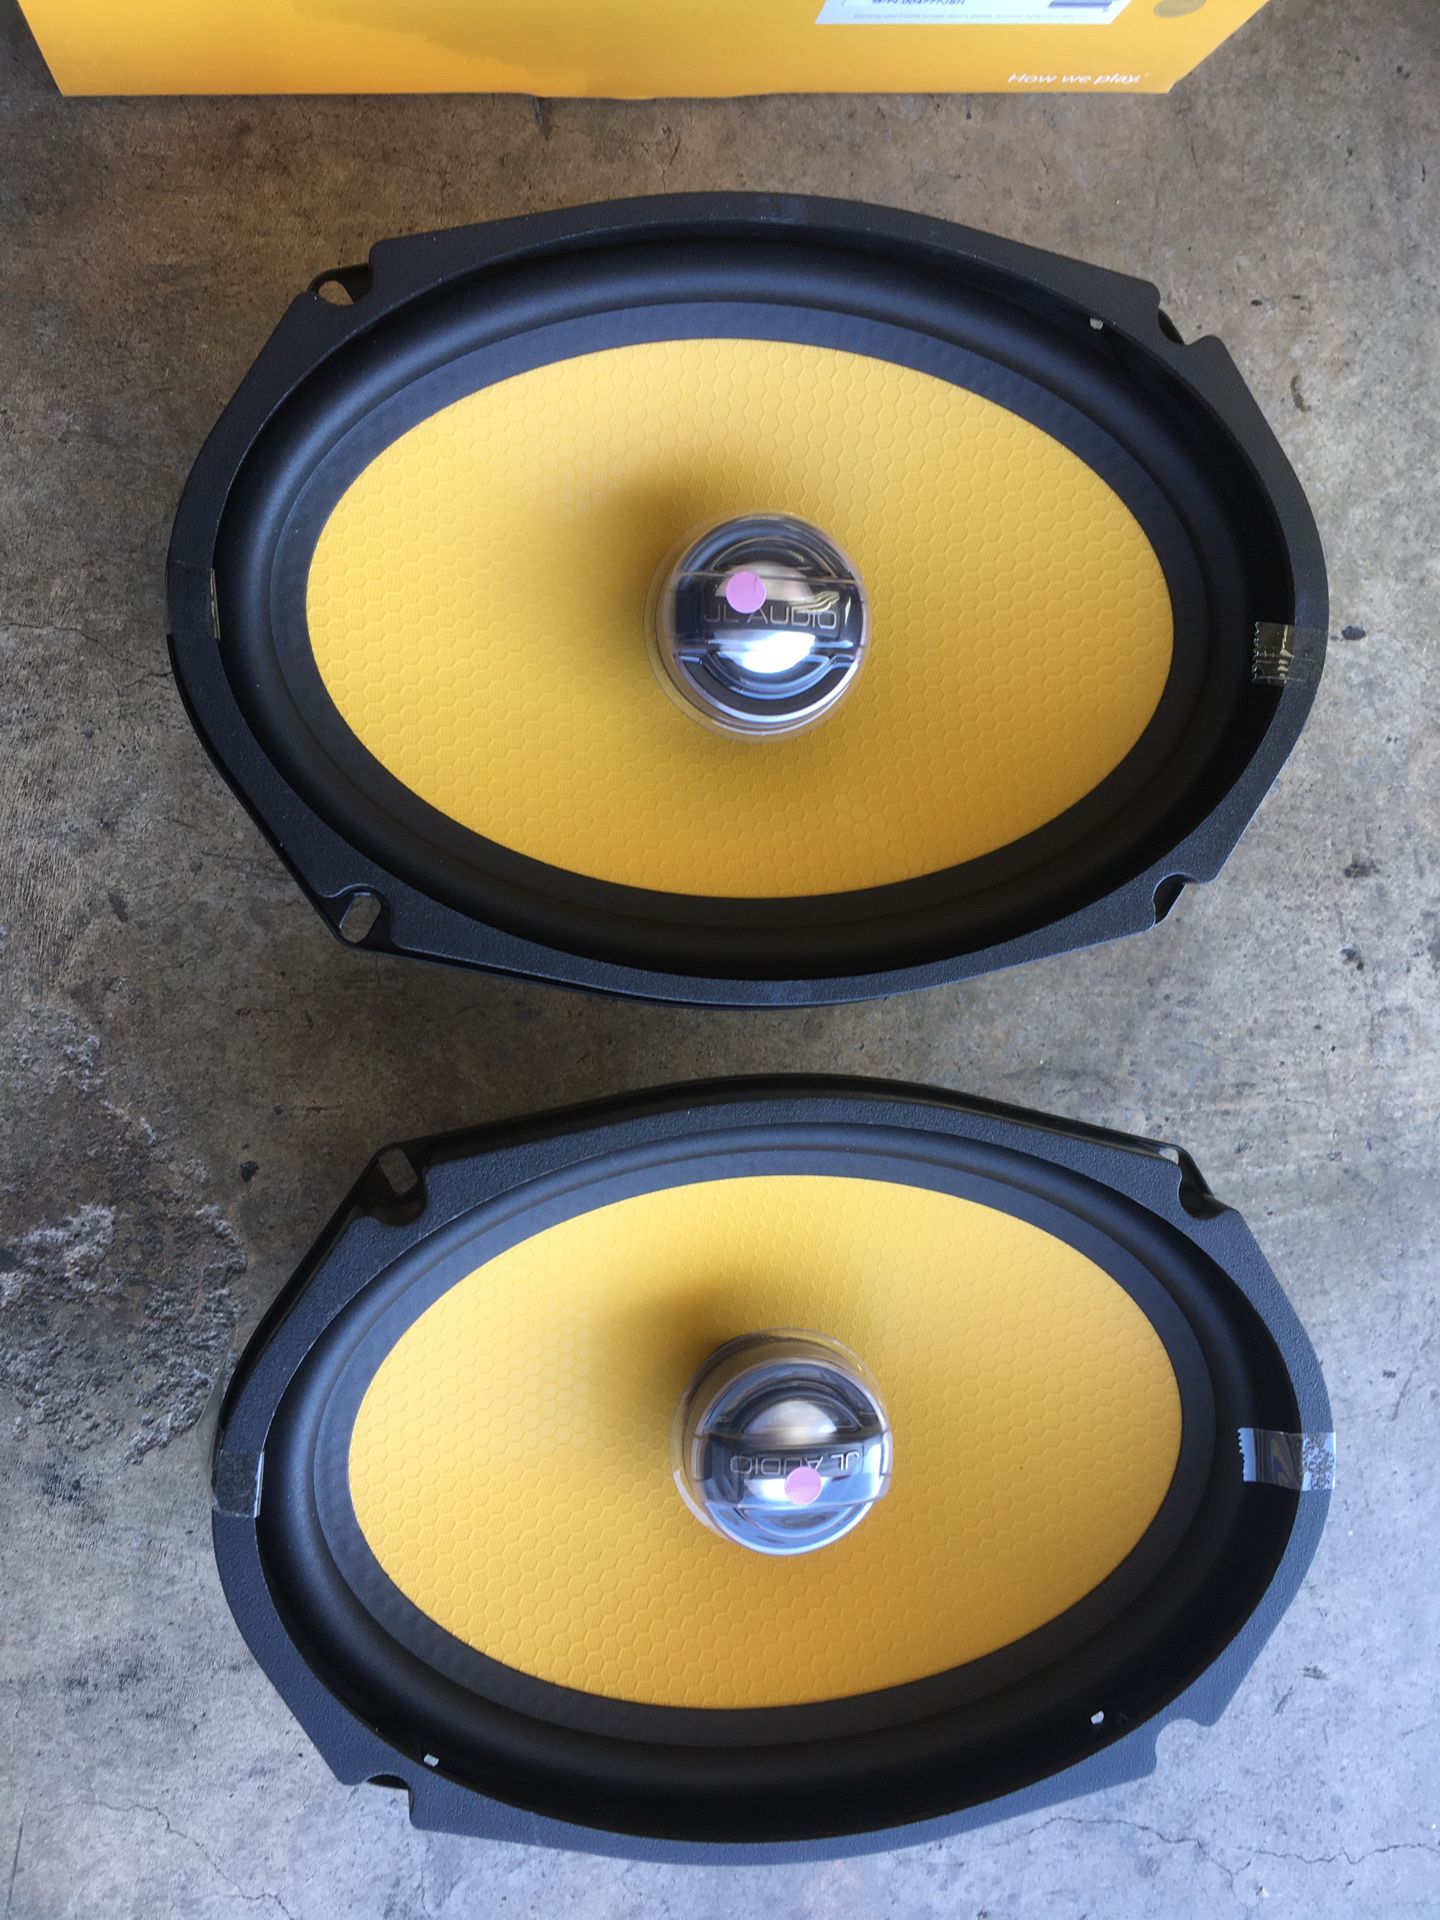 Jl audio c1-690x speakers 6x9 inch coaxial 200 watts RMS